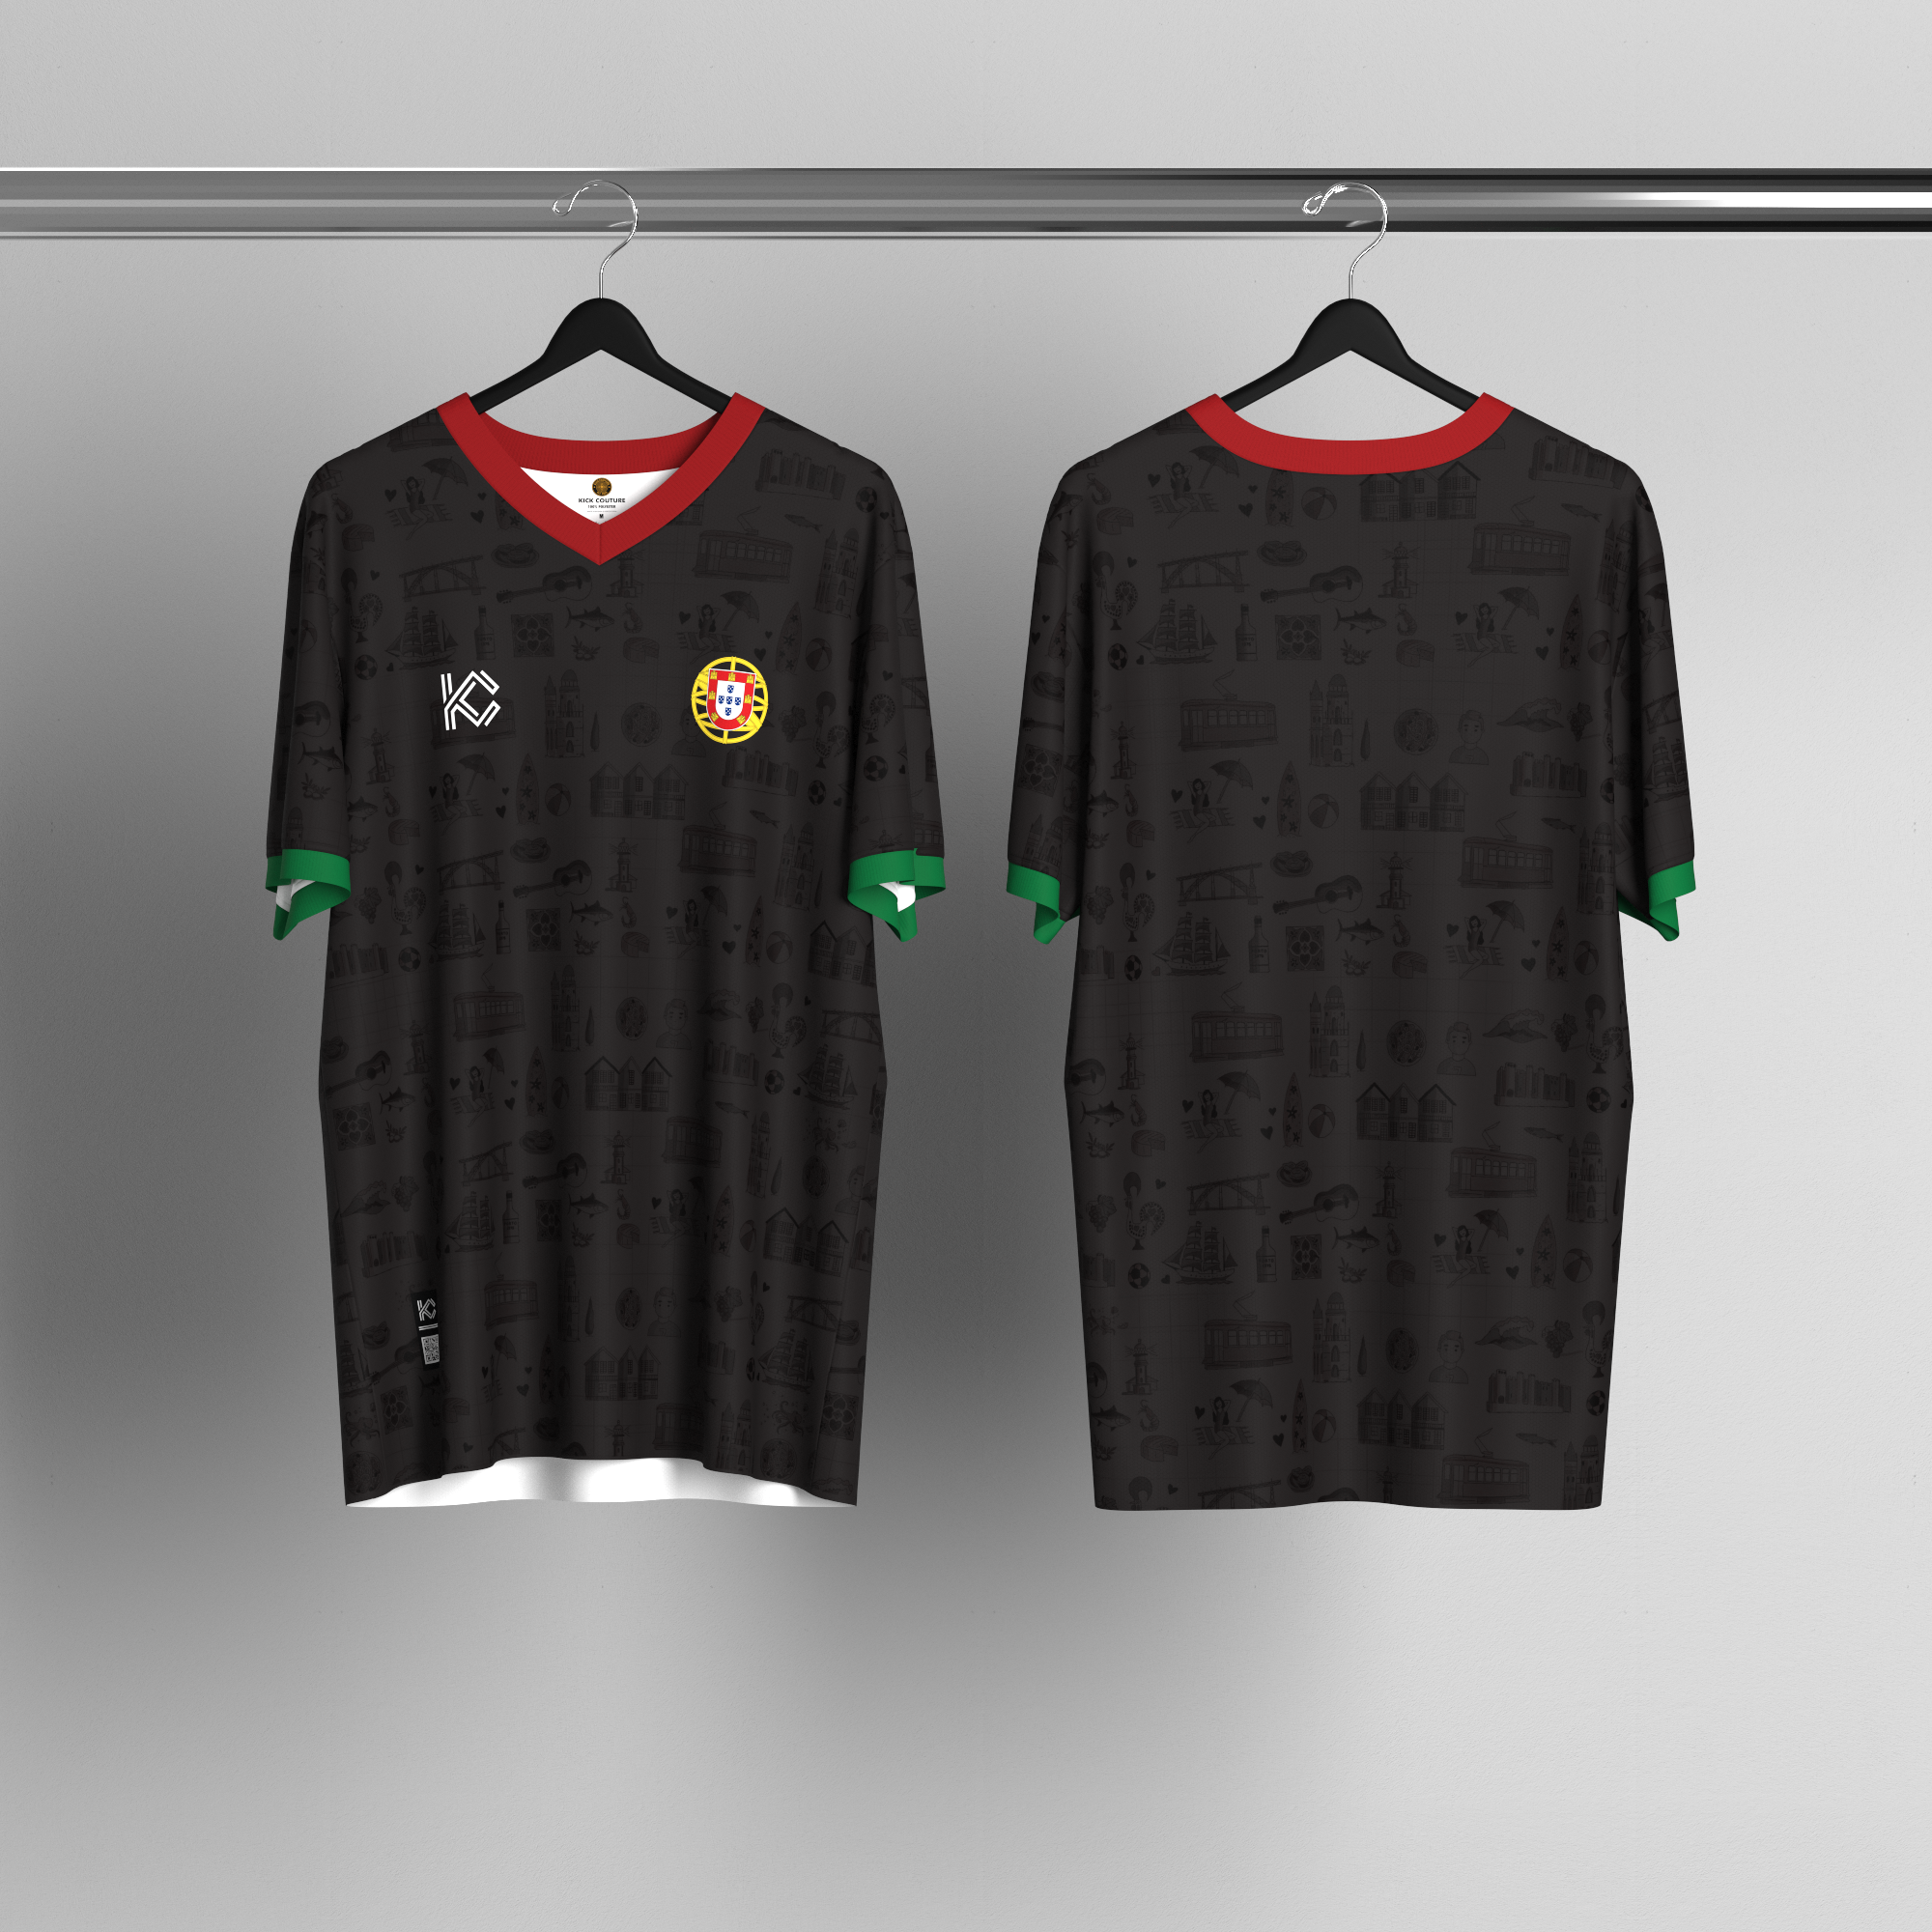 Portugal National Team Football Shirt Heritage Black